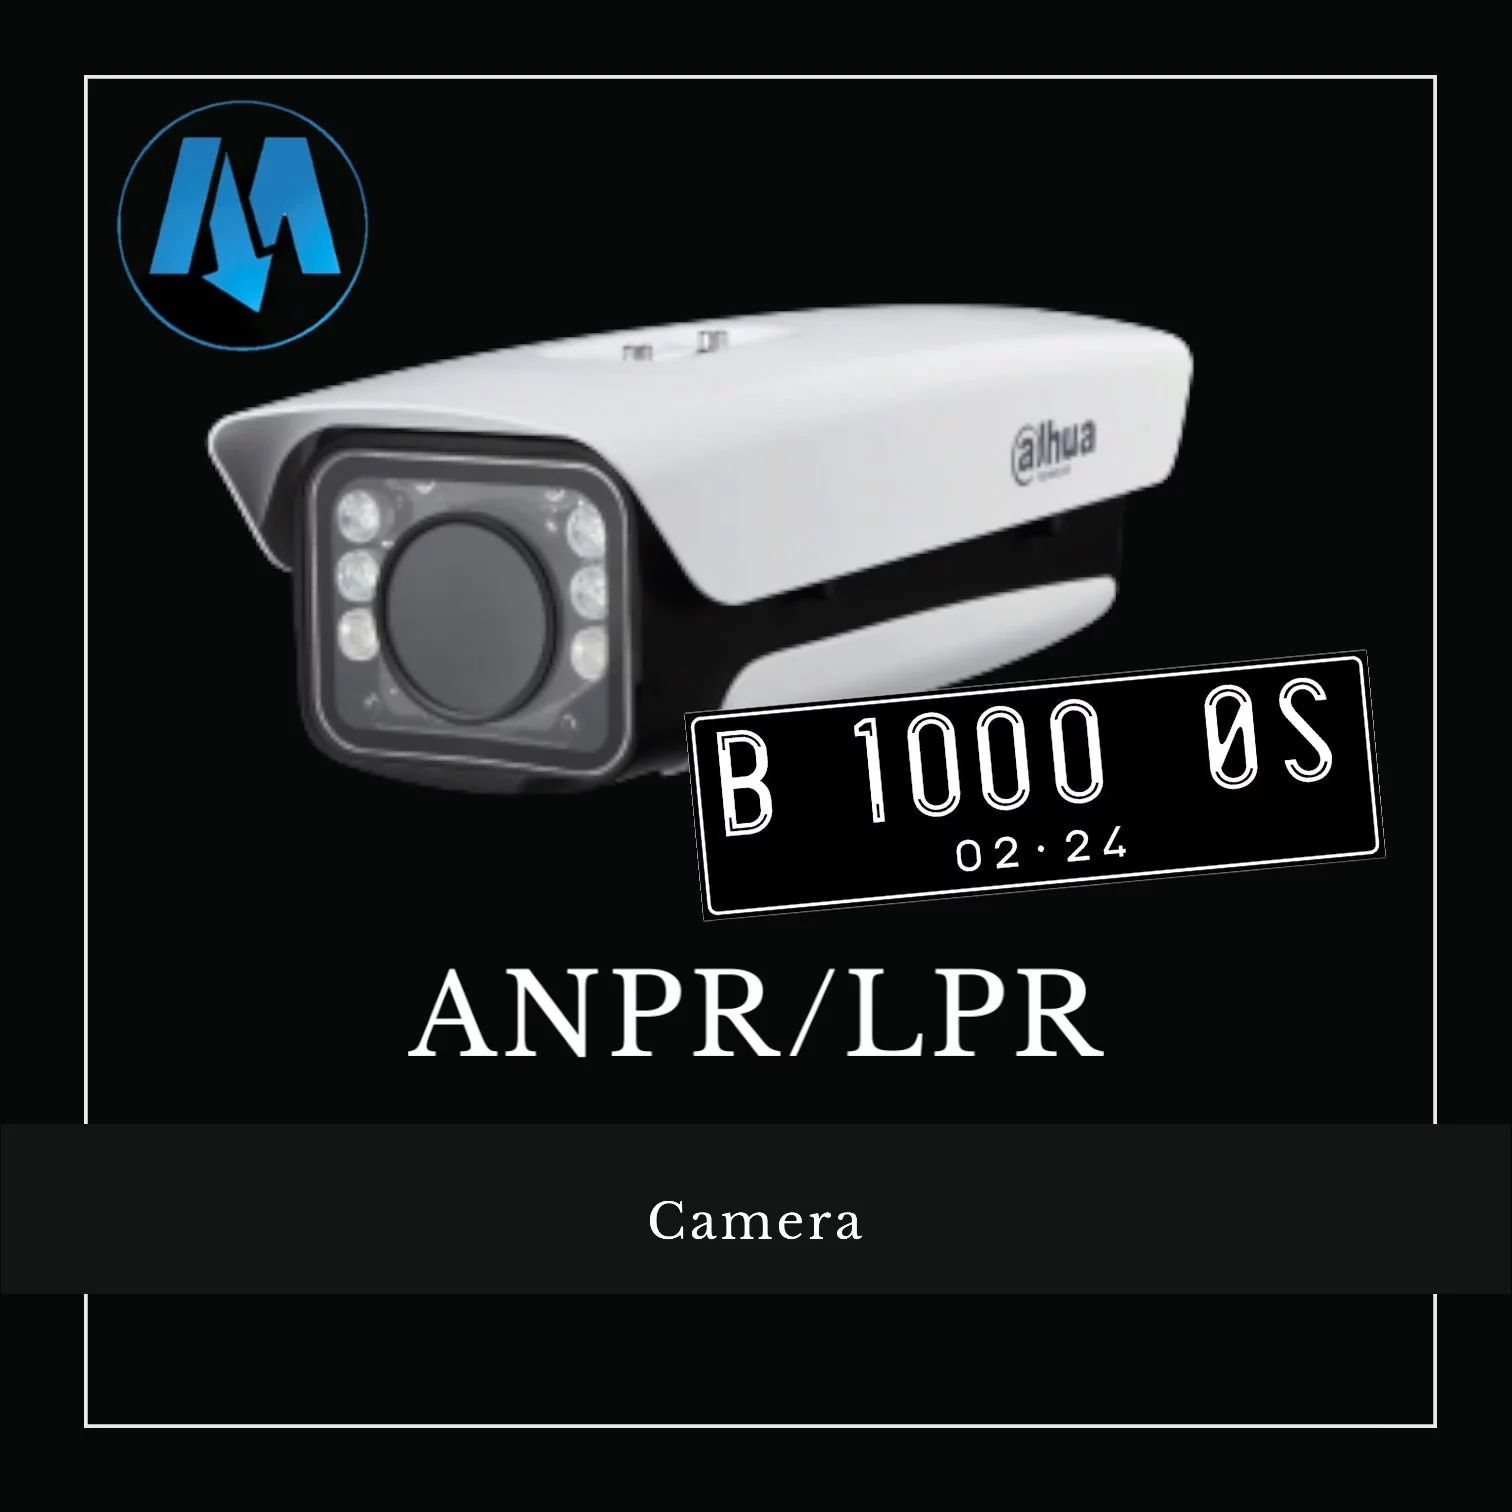 Kamera LPR atau ANPR Dahua – Integrasi dengan Sistem Parkir MSM Parking untuk Tingkat Akurasi 99% camera